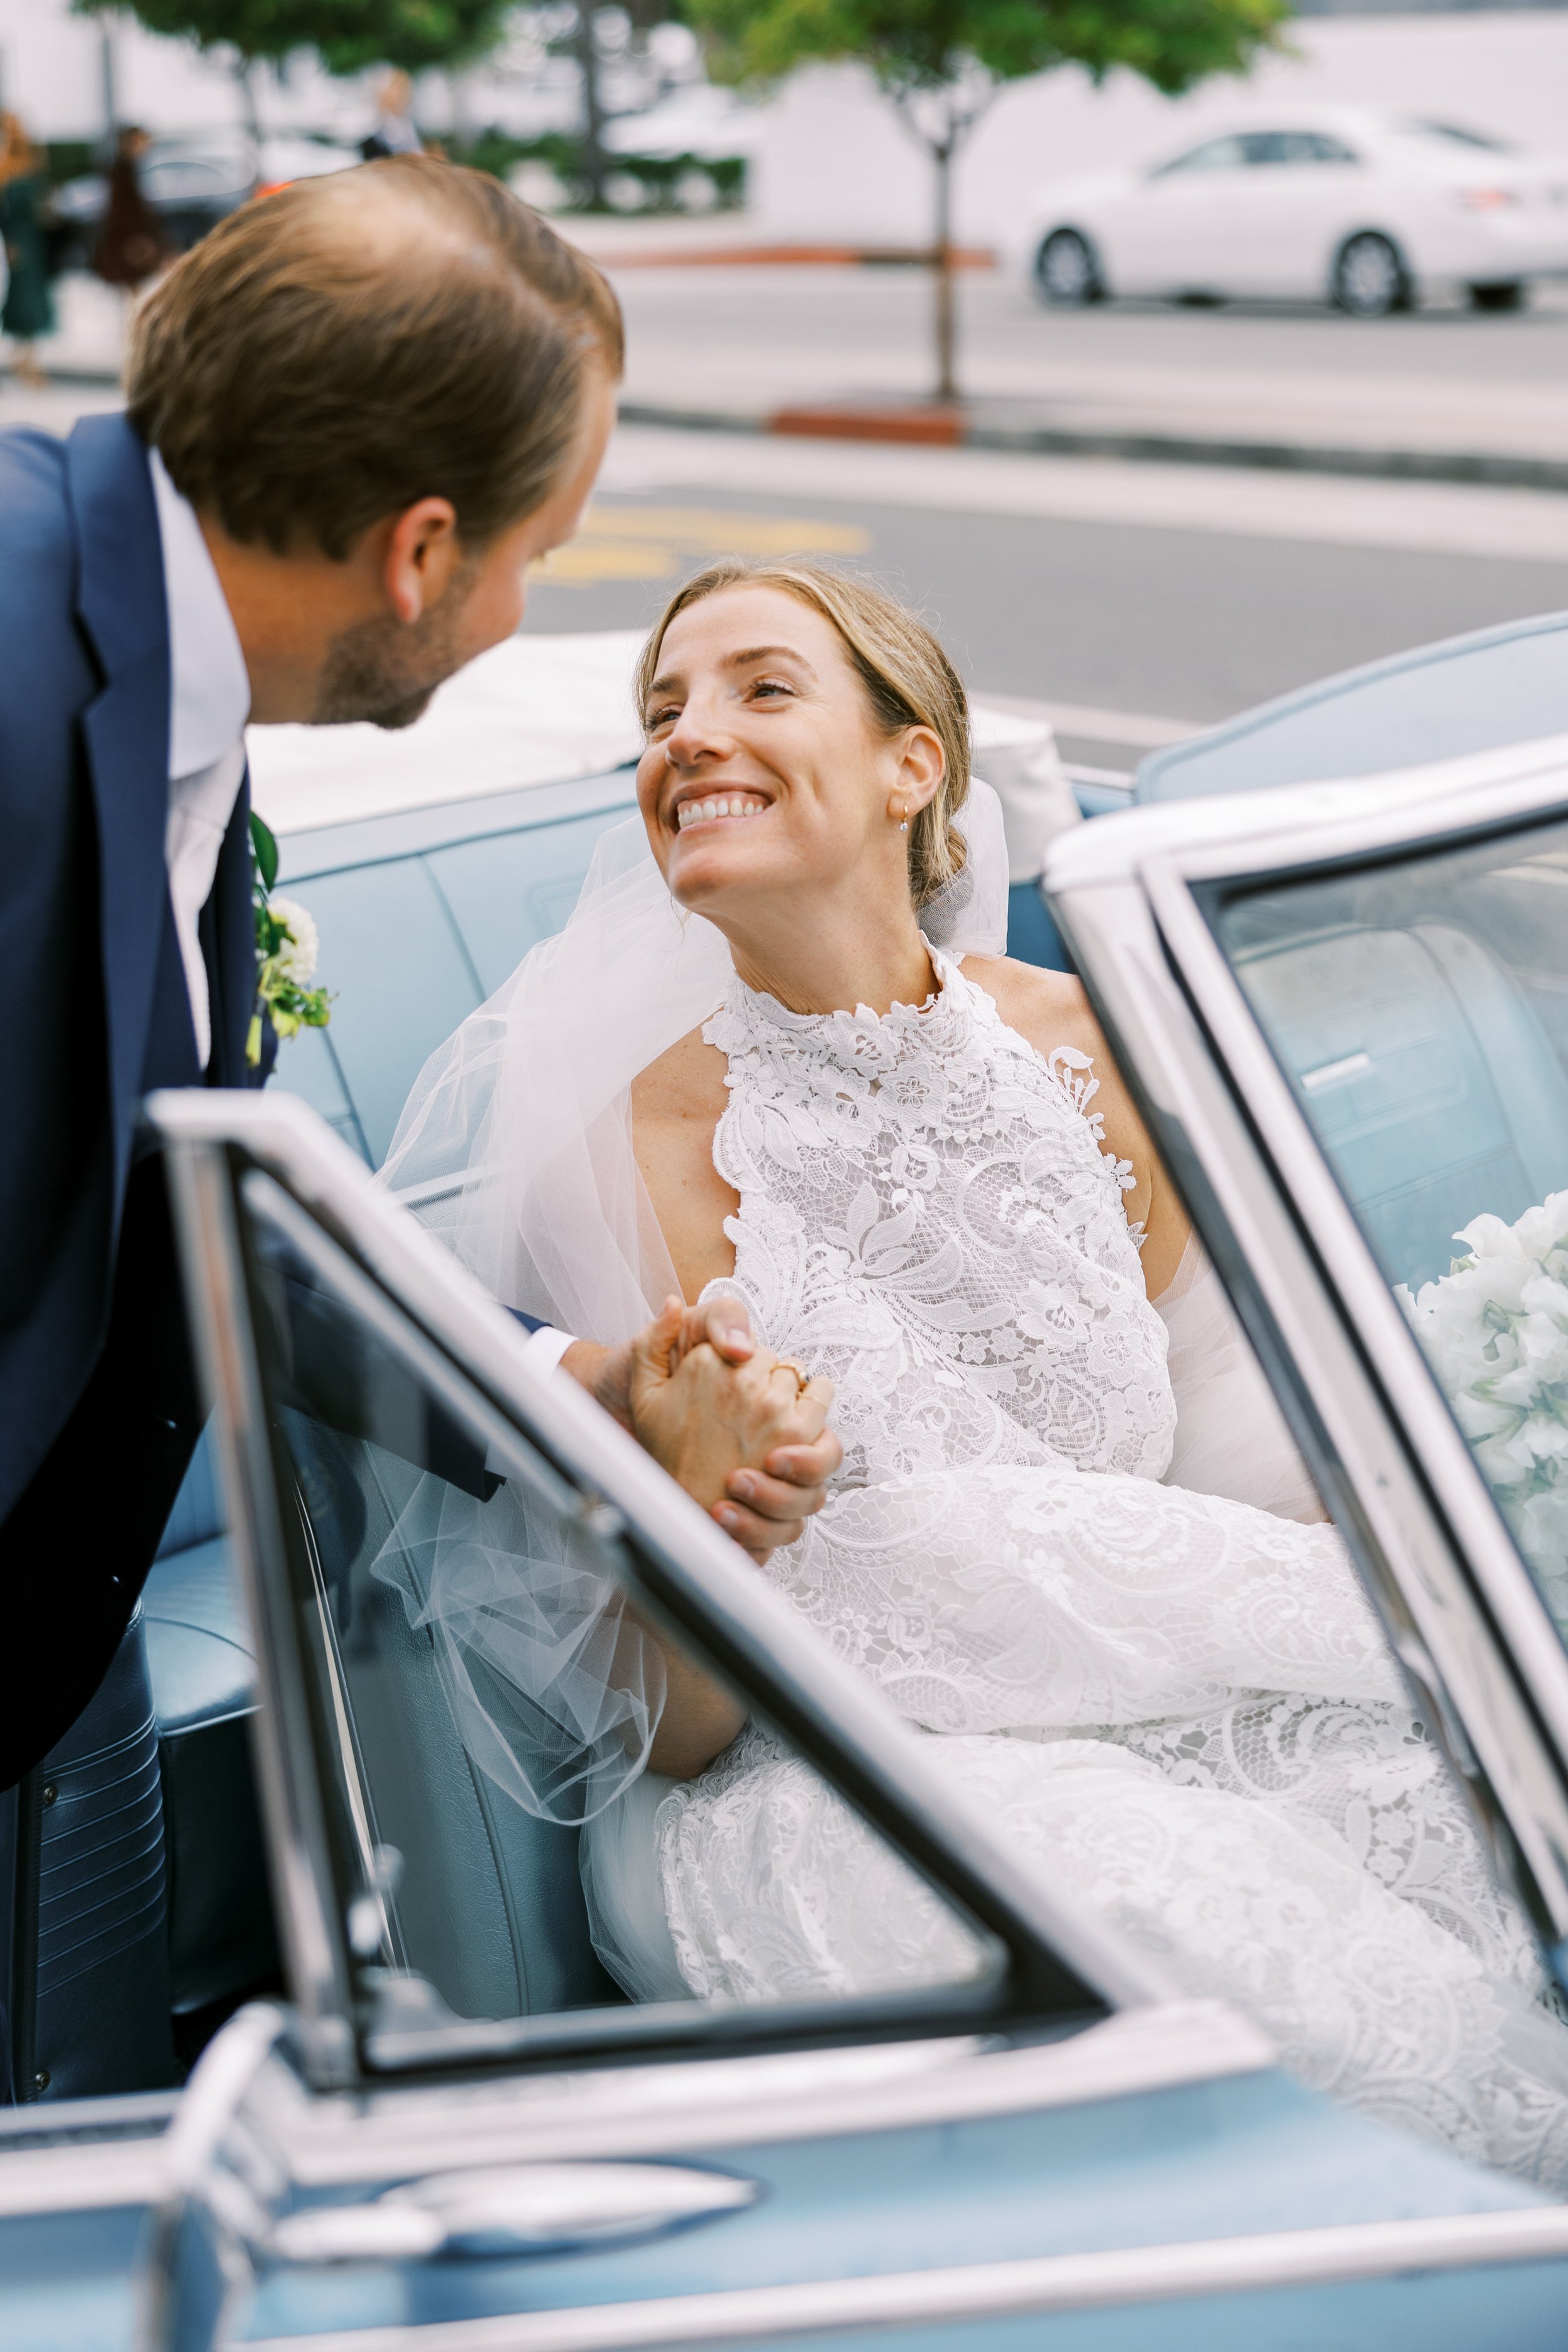 Get-away-car-wedding.jpg